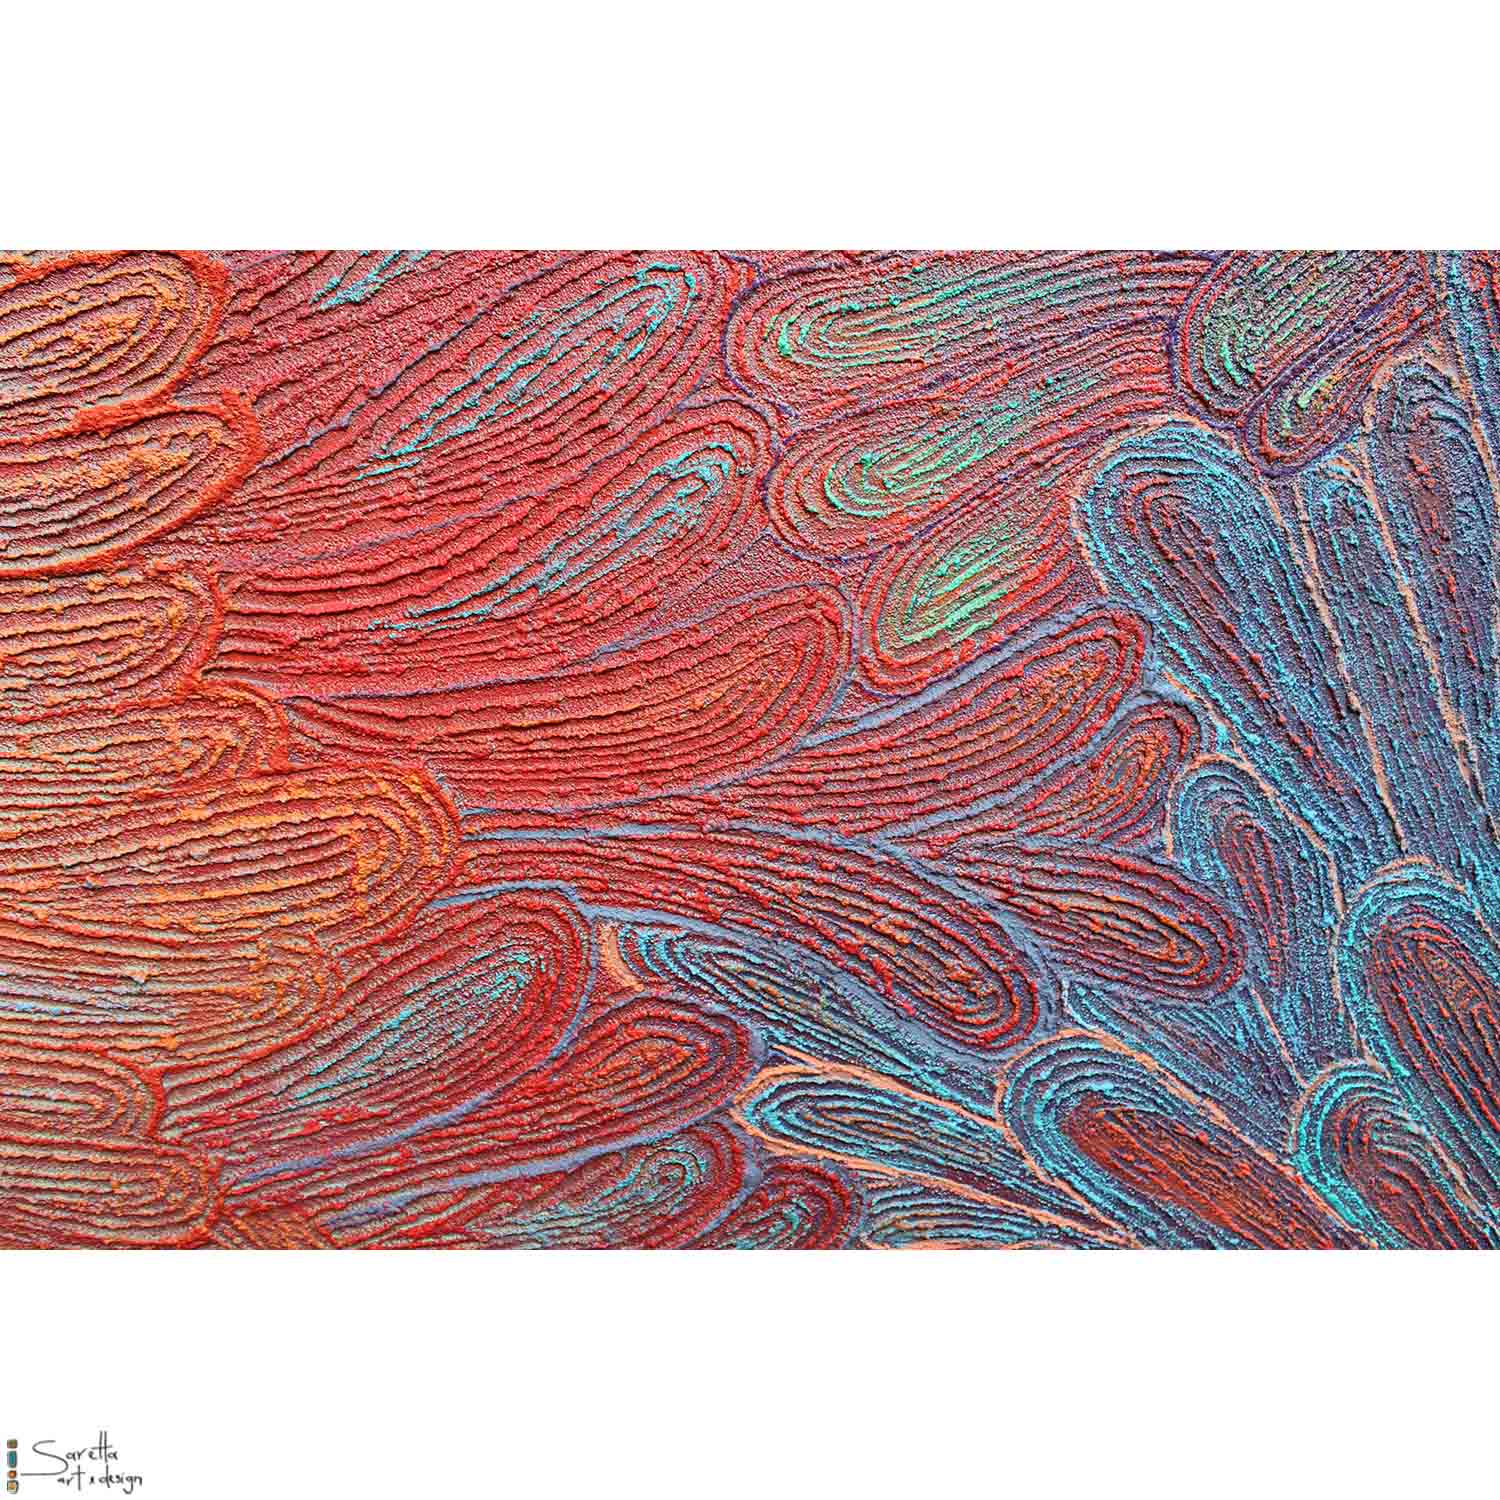 Kulkal – Lyrebird Feathers - Saretta Art & Design